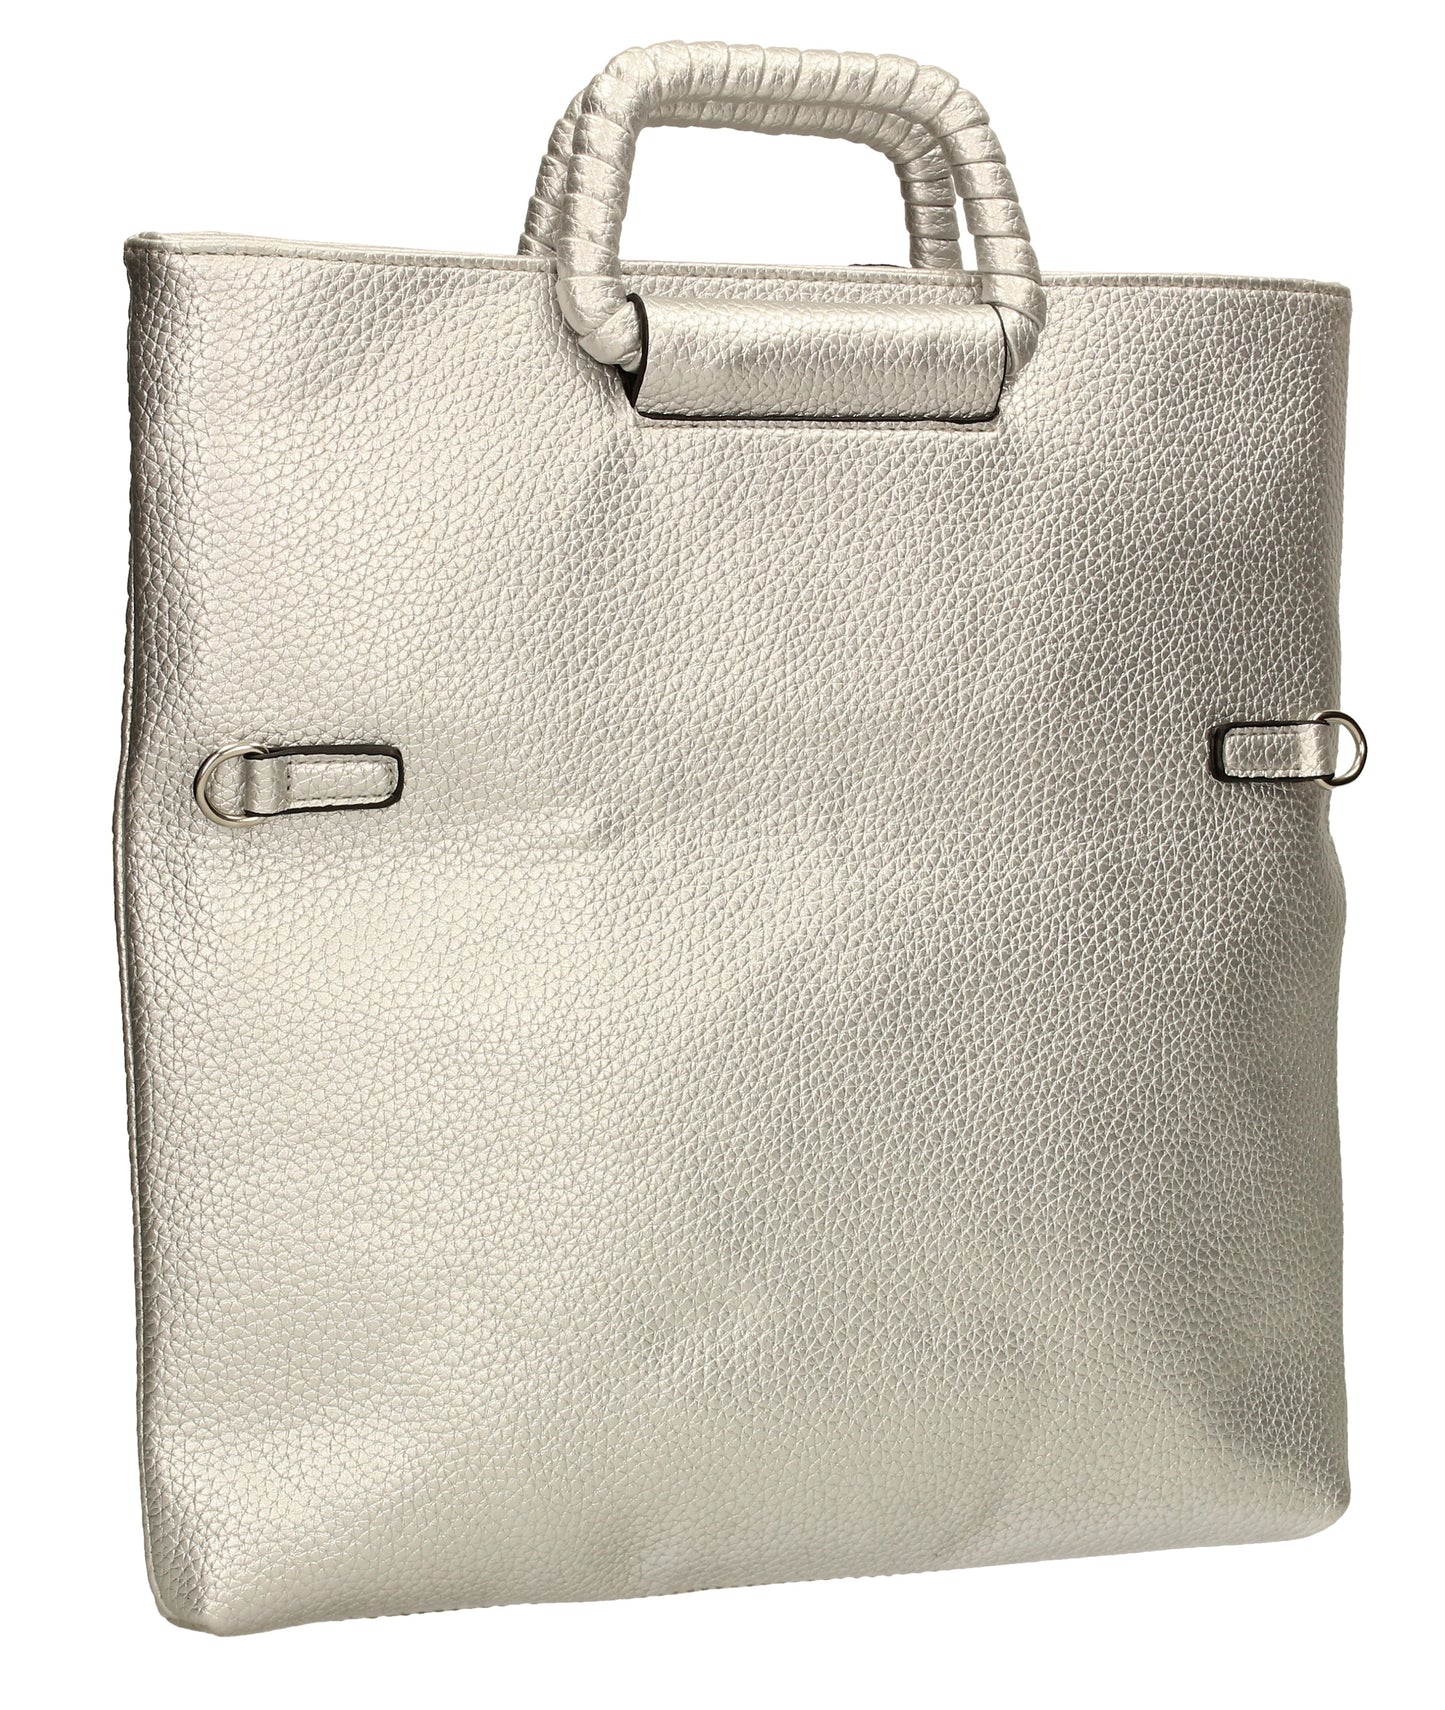 SWANKYSWANS Kara Fold Over Clutch Bag Silver Cute Cheap Clutch Bag For Weddings School and Work